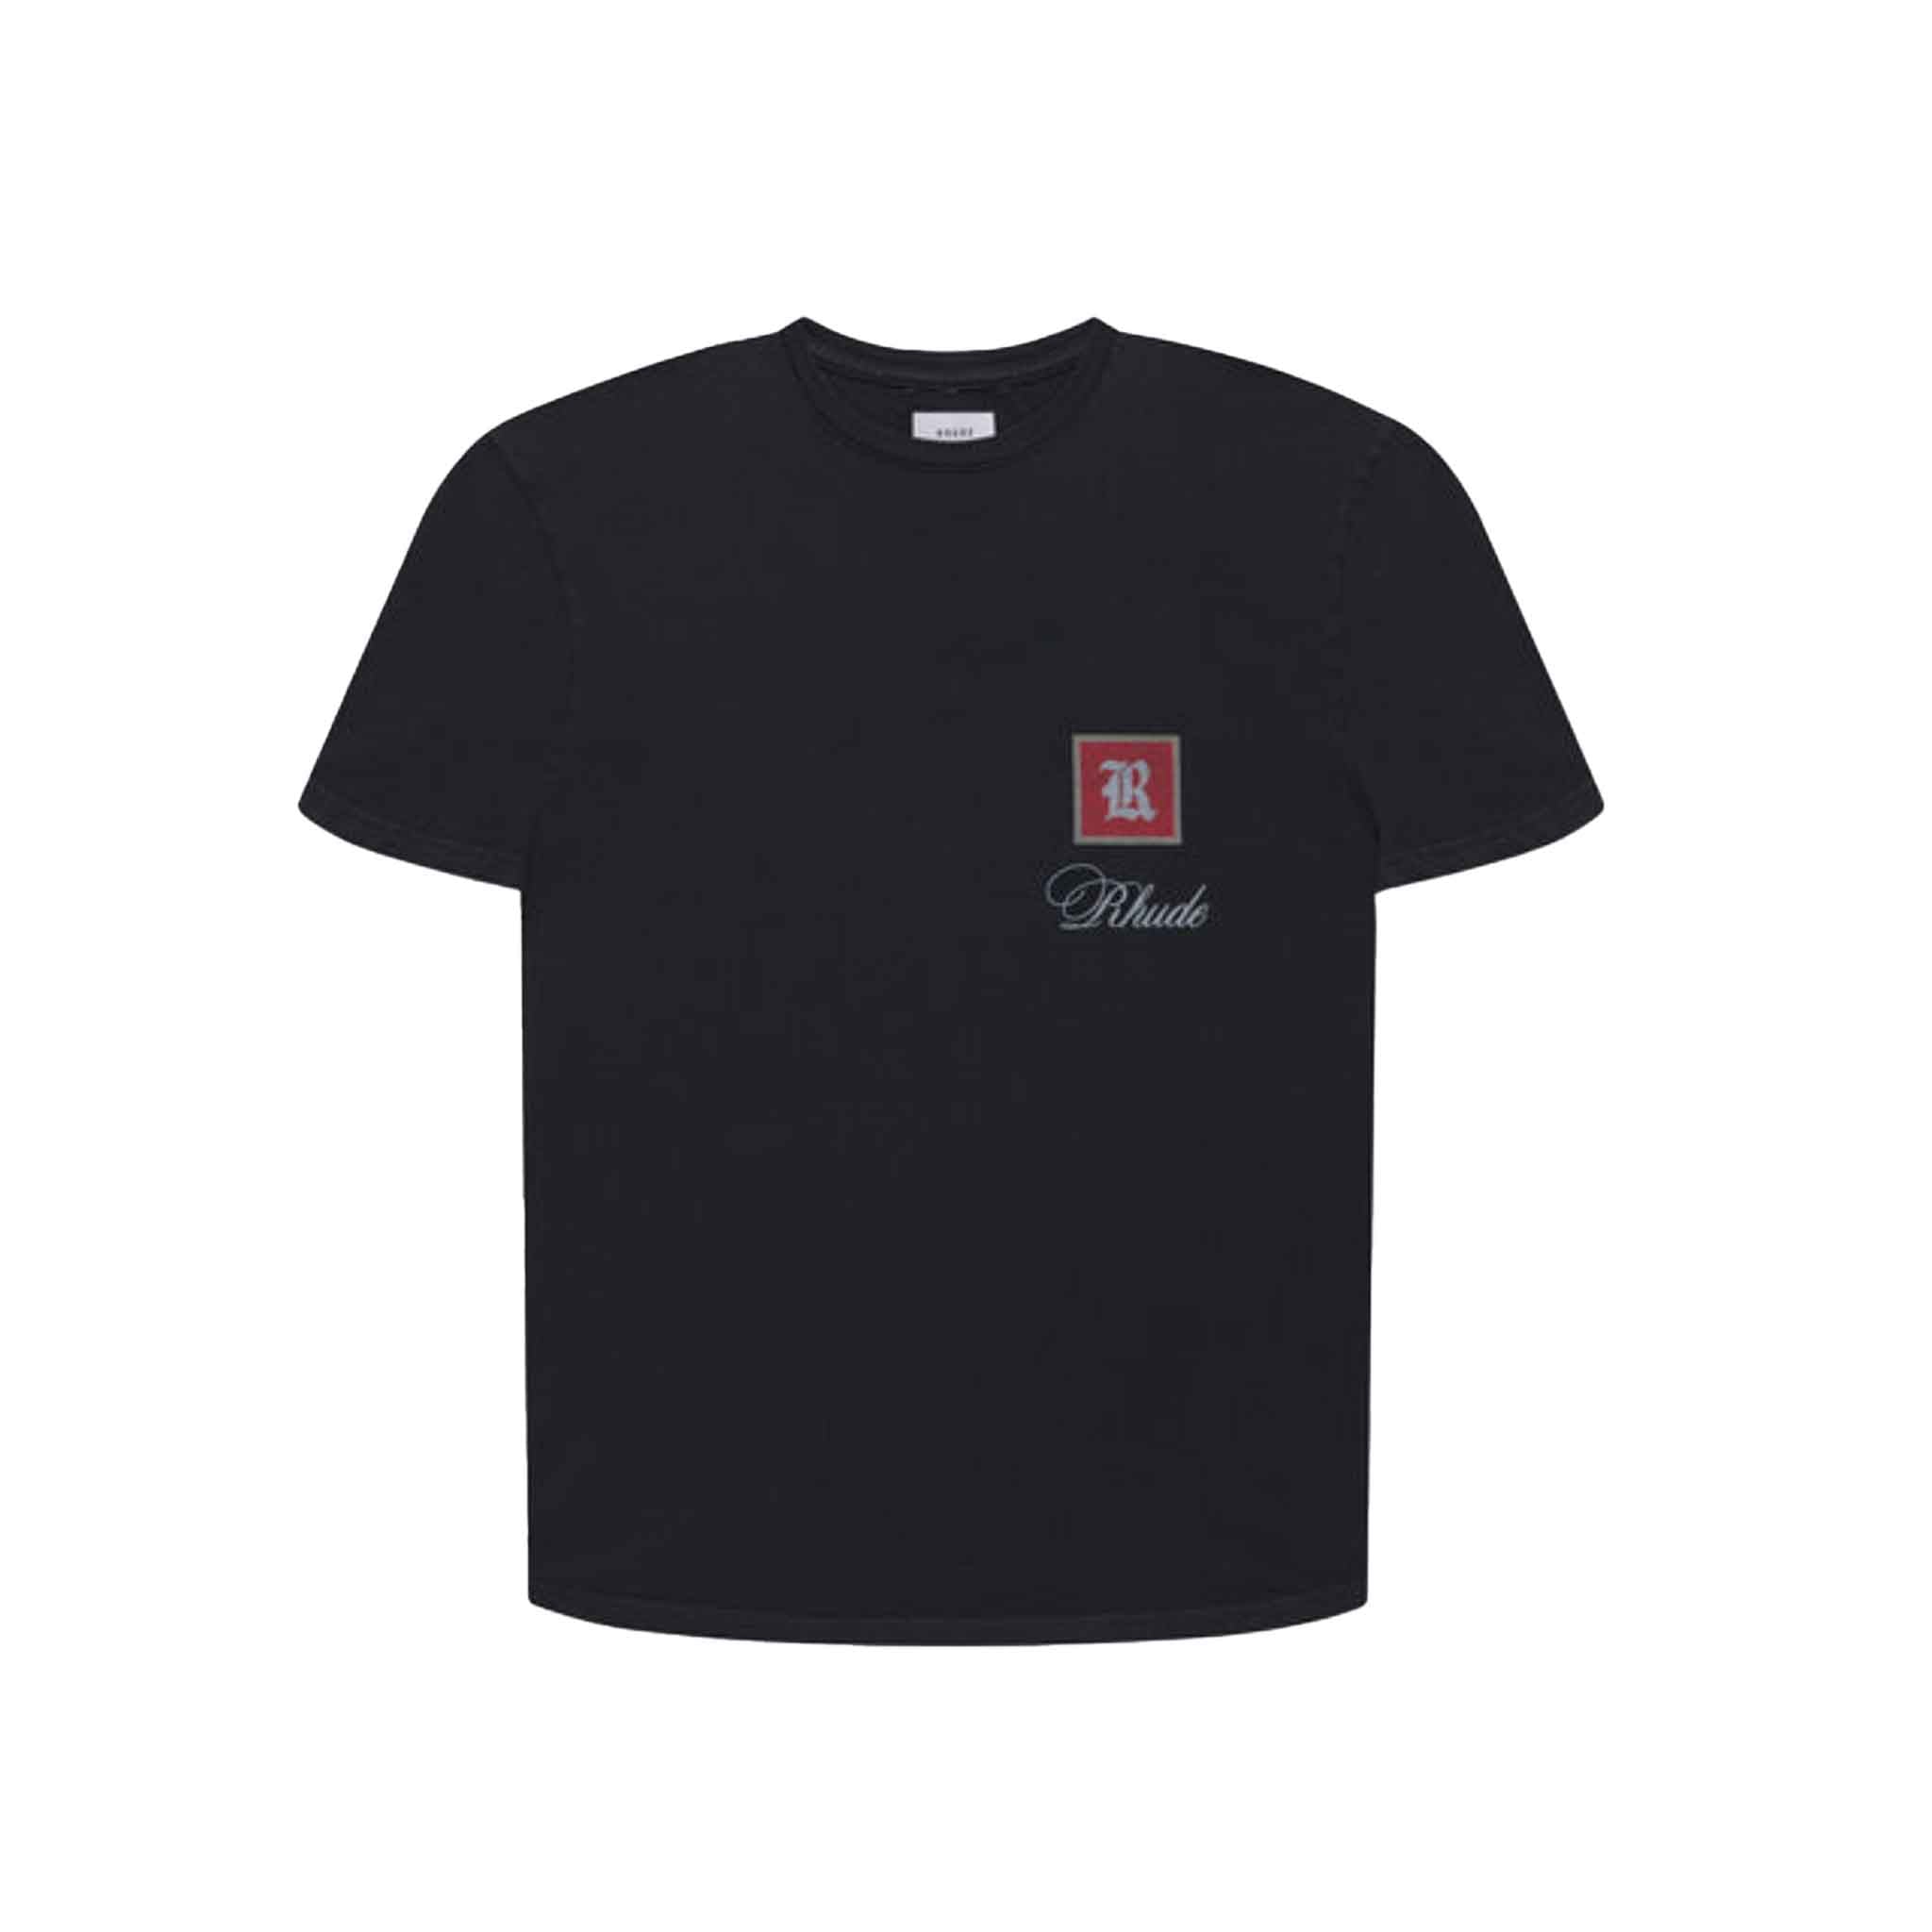 Rhude Monaco T-Shirt in Vintage Black